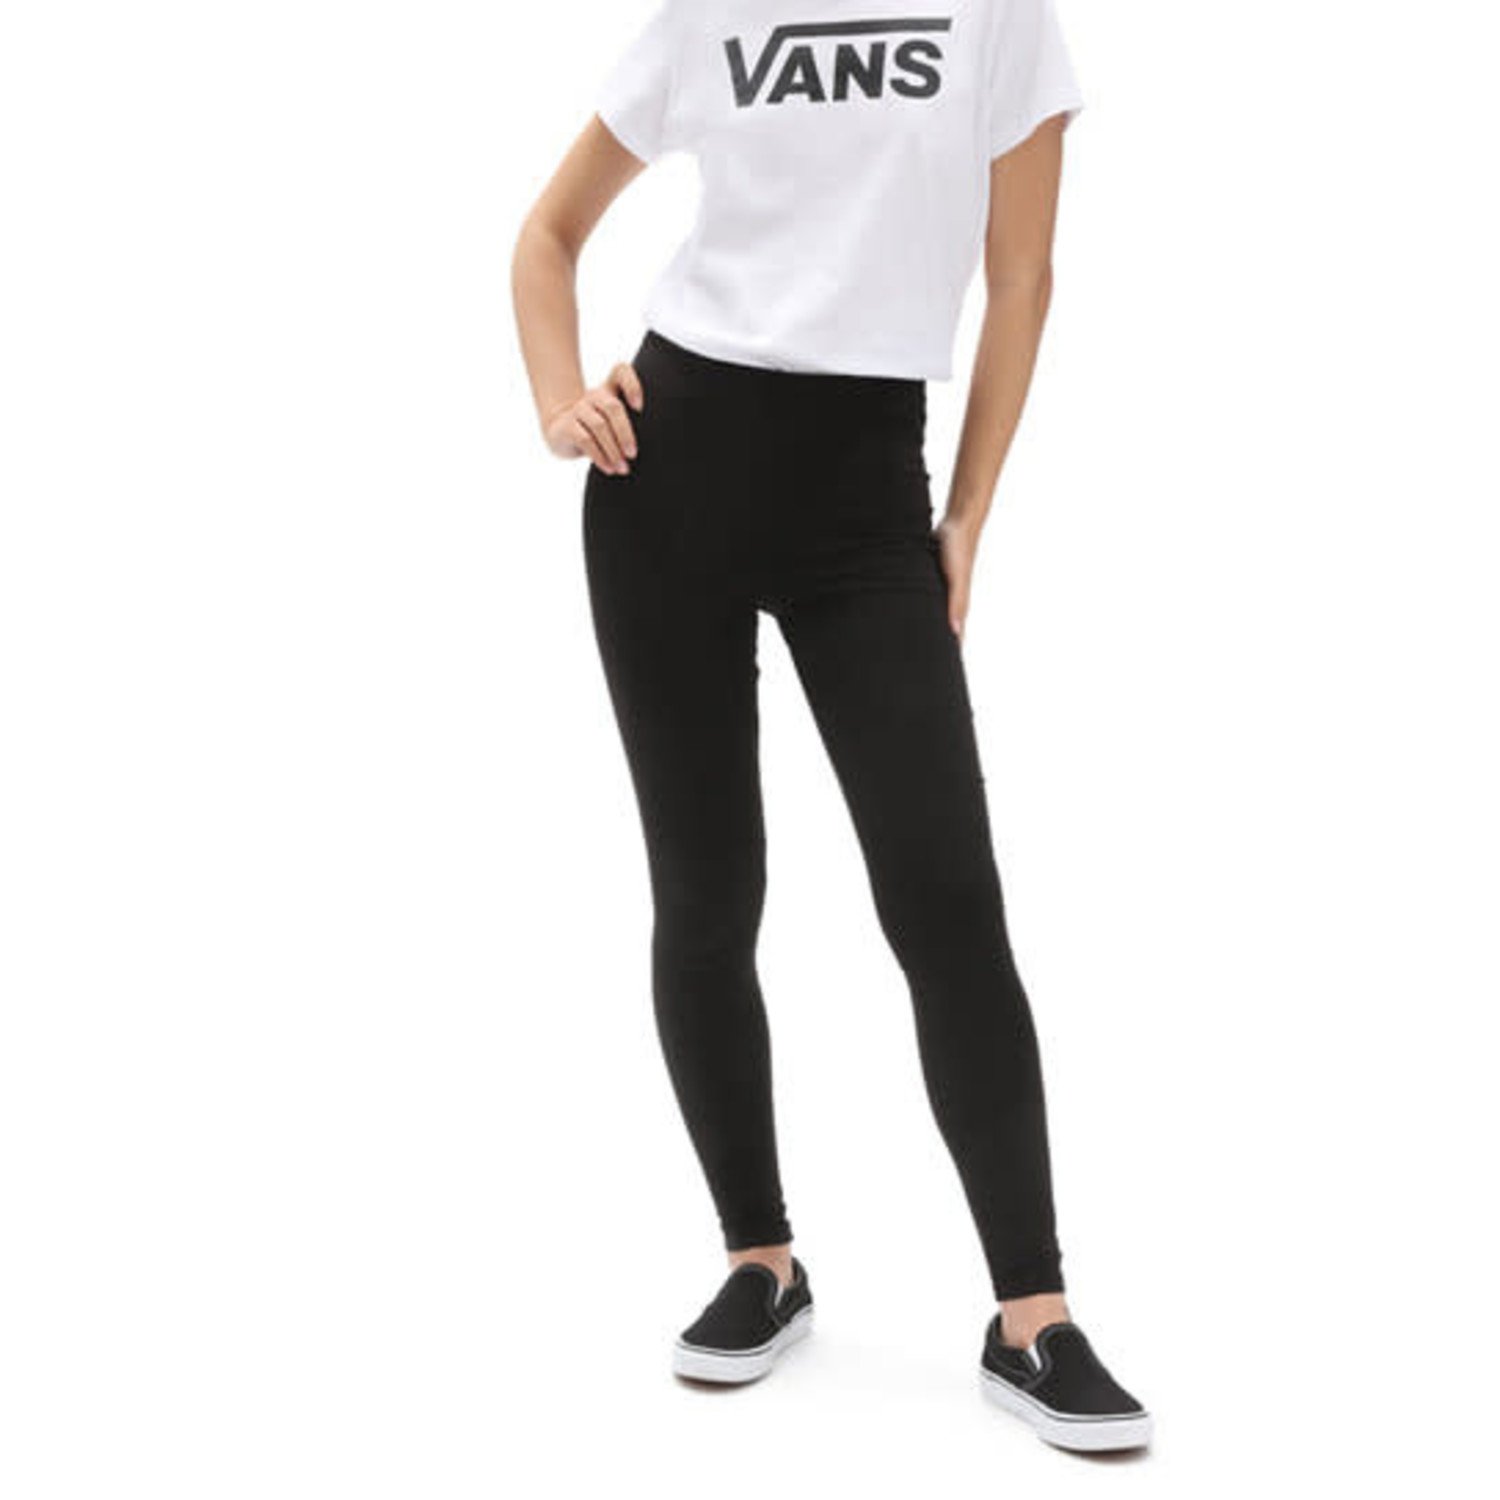 Vans Women's Chalkboard Classic Black Legging (VN0A4S9WBLK) Size S - NWT